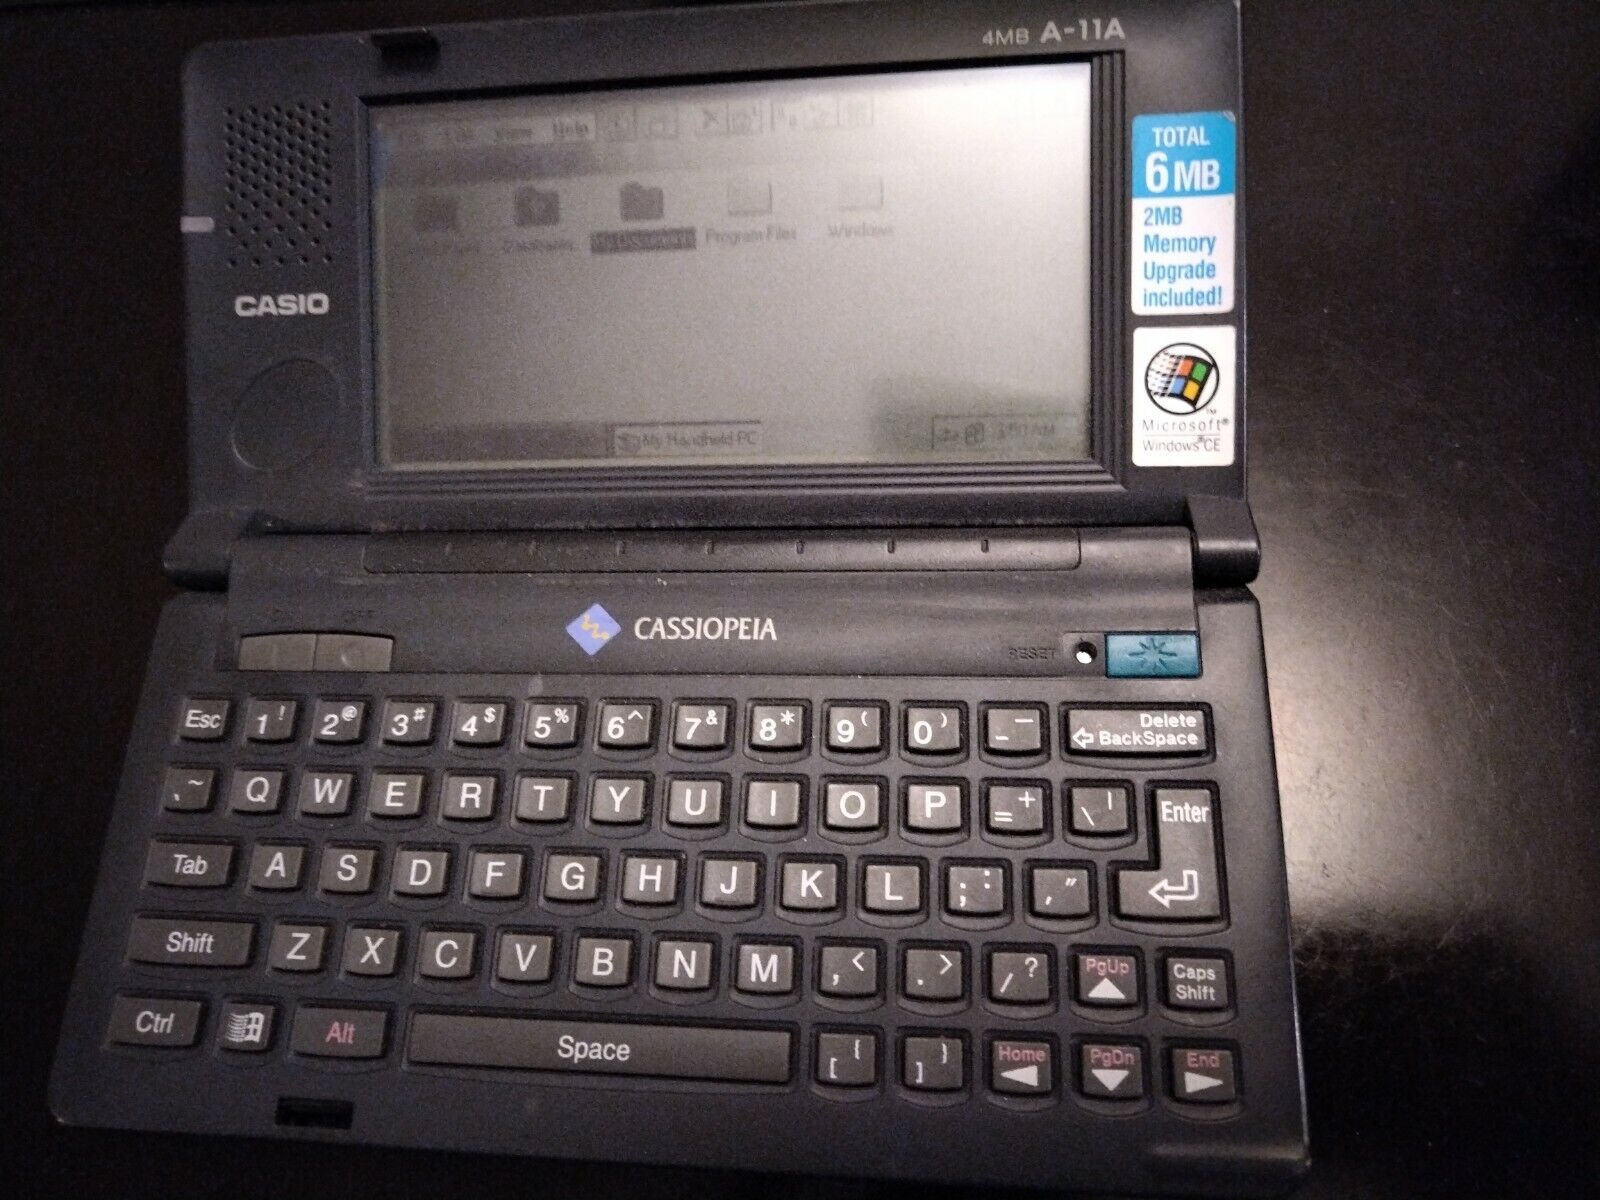  Vintage PDA Pocket Computer Casio Cassiopeia A-11A on Windows CE 2.0 